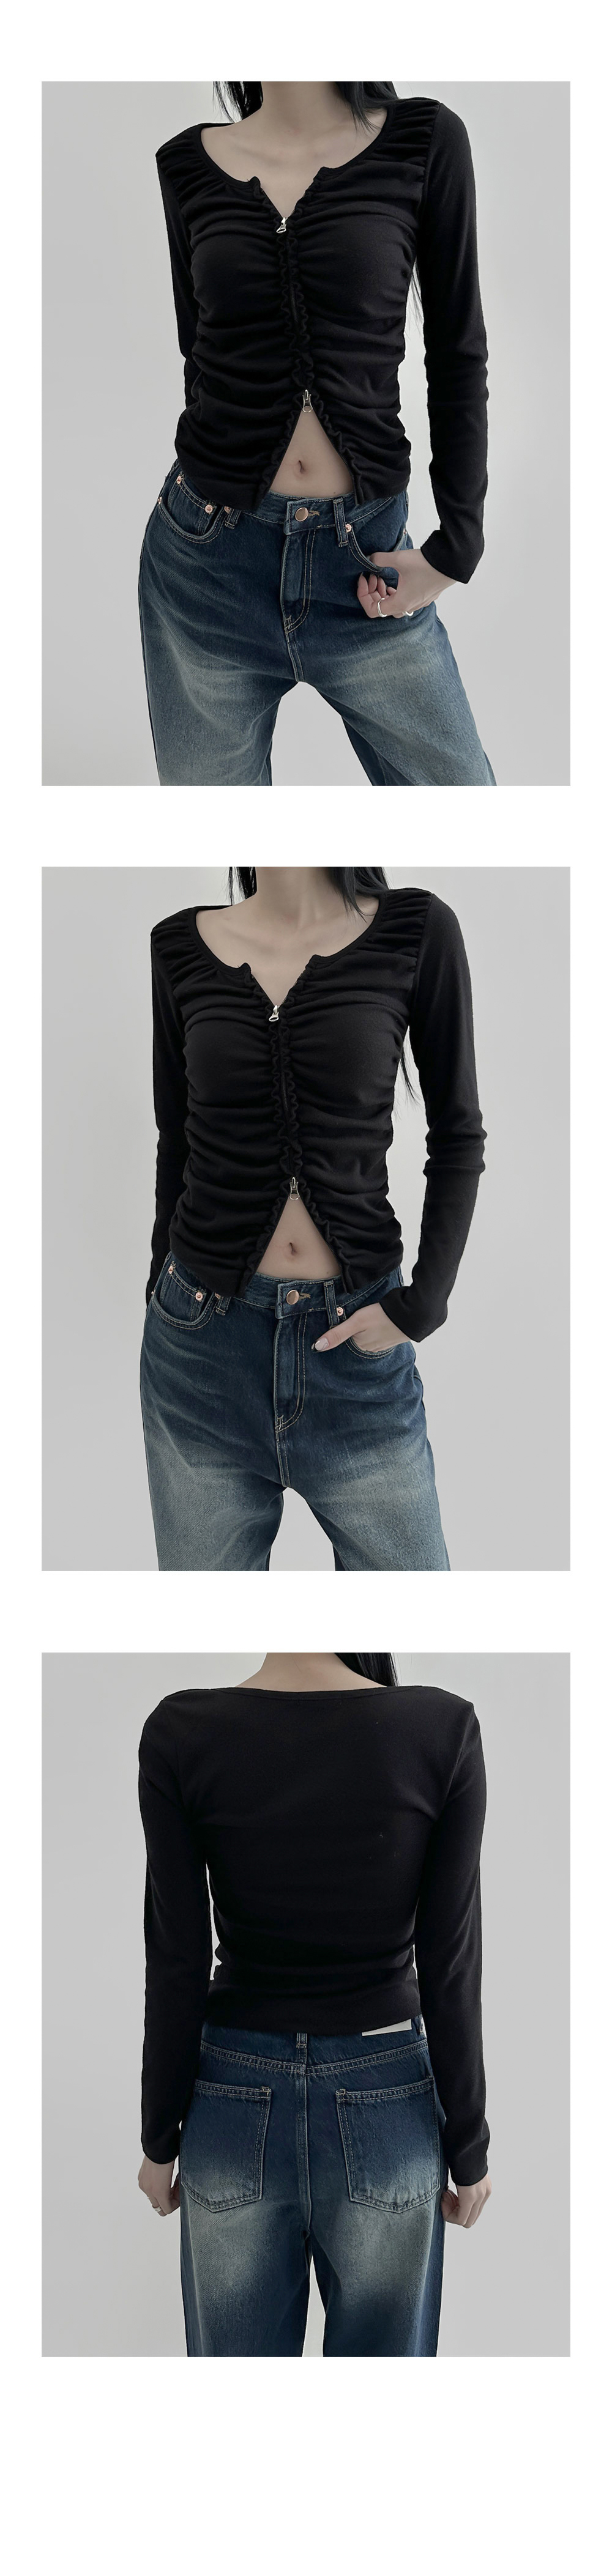 suspenders skirt/pants model image-S1L13